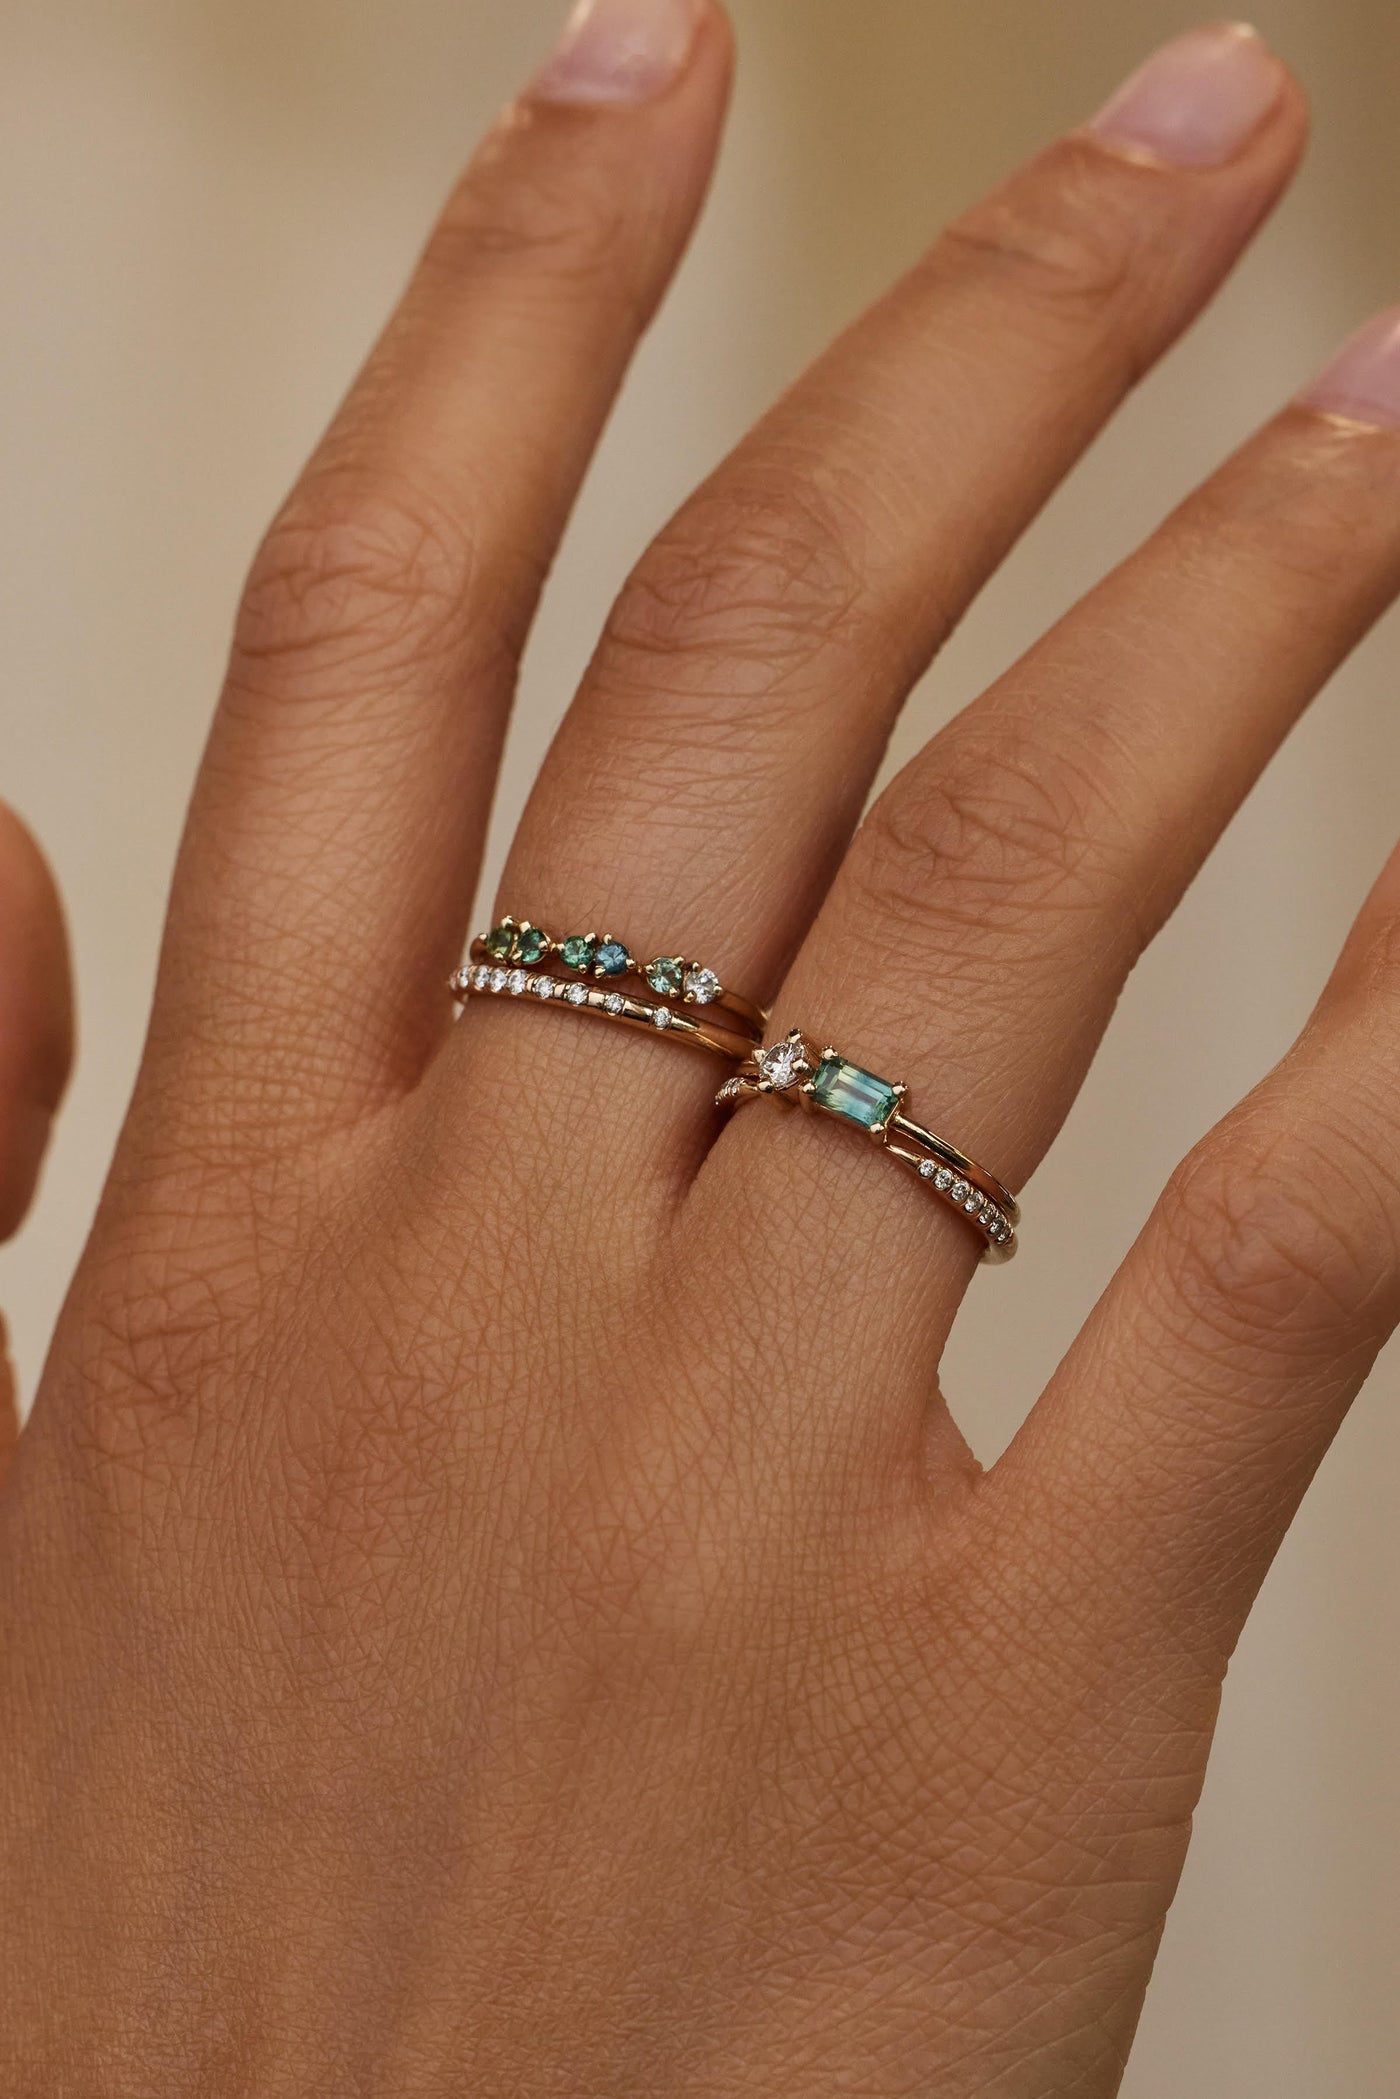 Emerald Cut Sapphire and Diamond Mosaic Ring No. 43